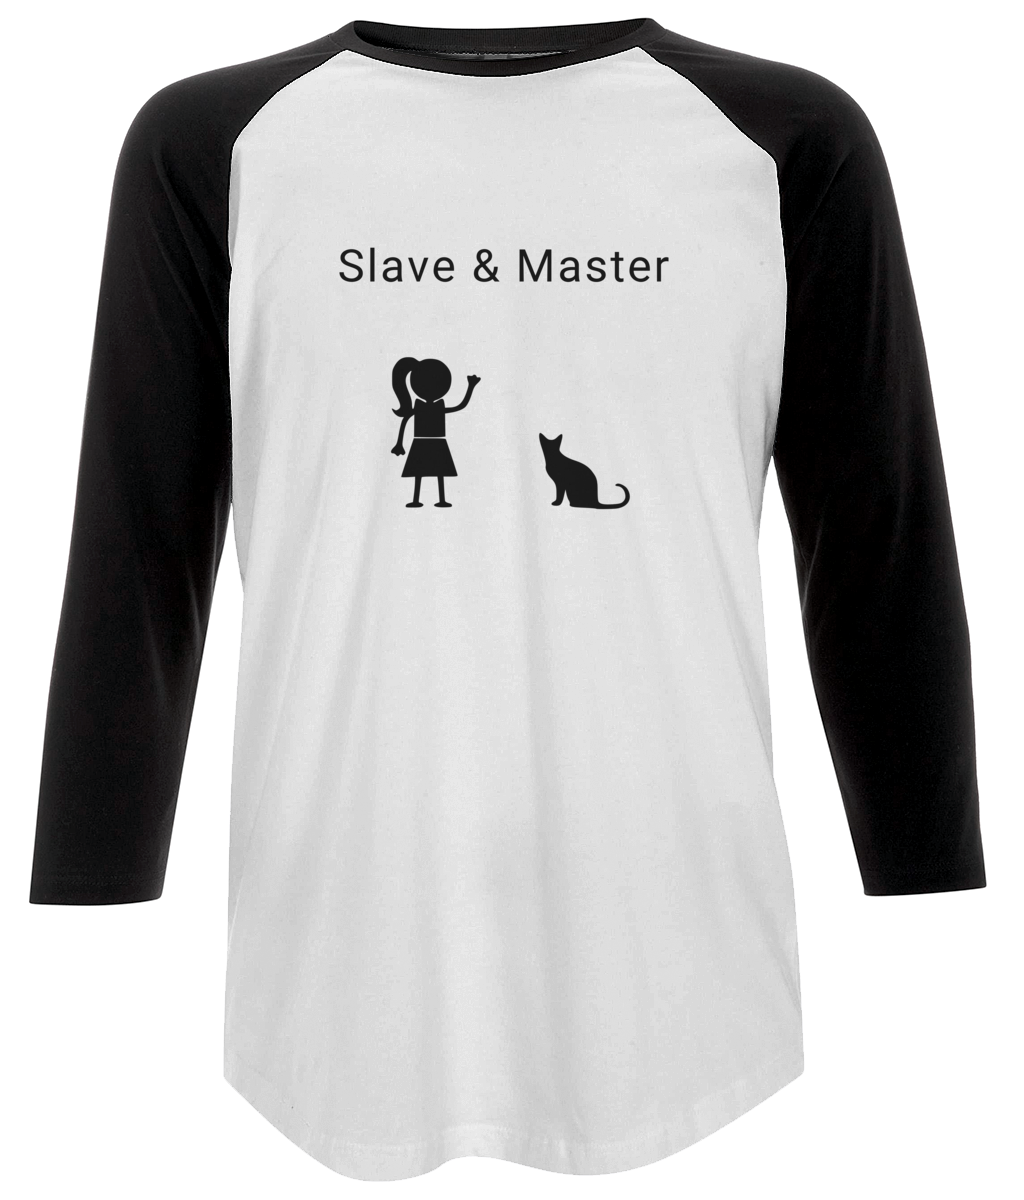 'Slave & Master' Baseball T-shirt - squishbeans